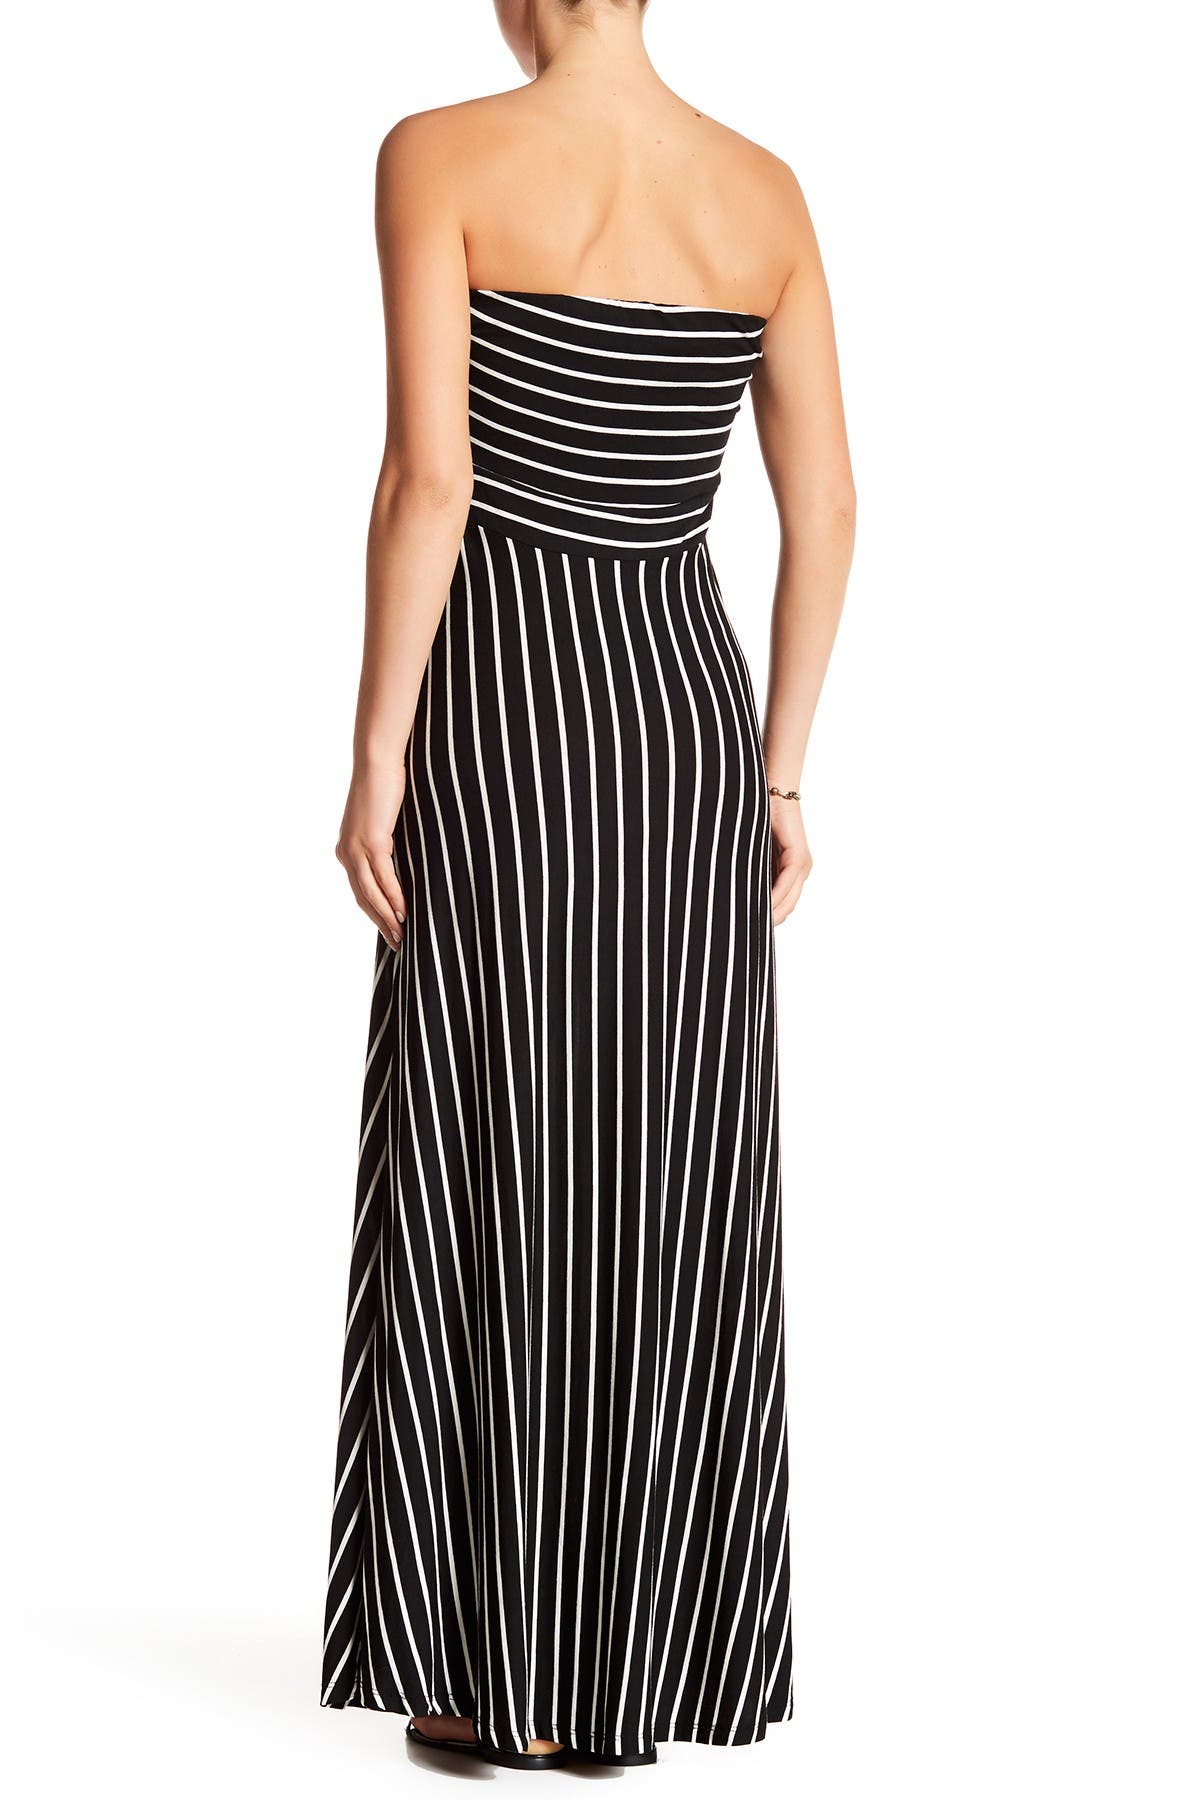 WEST KEI | Strapless Stripe Maxi Dress | Nordstrom Rack